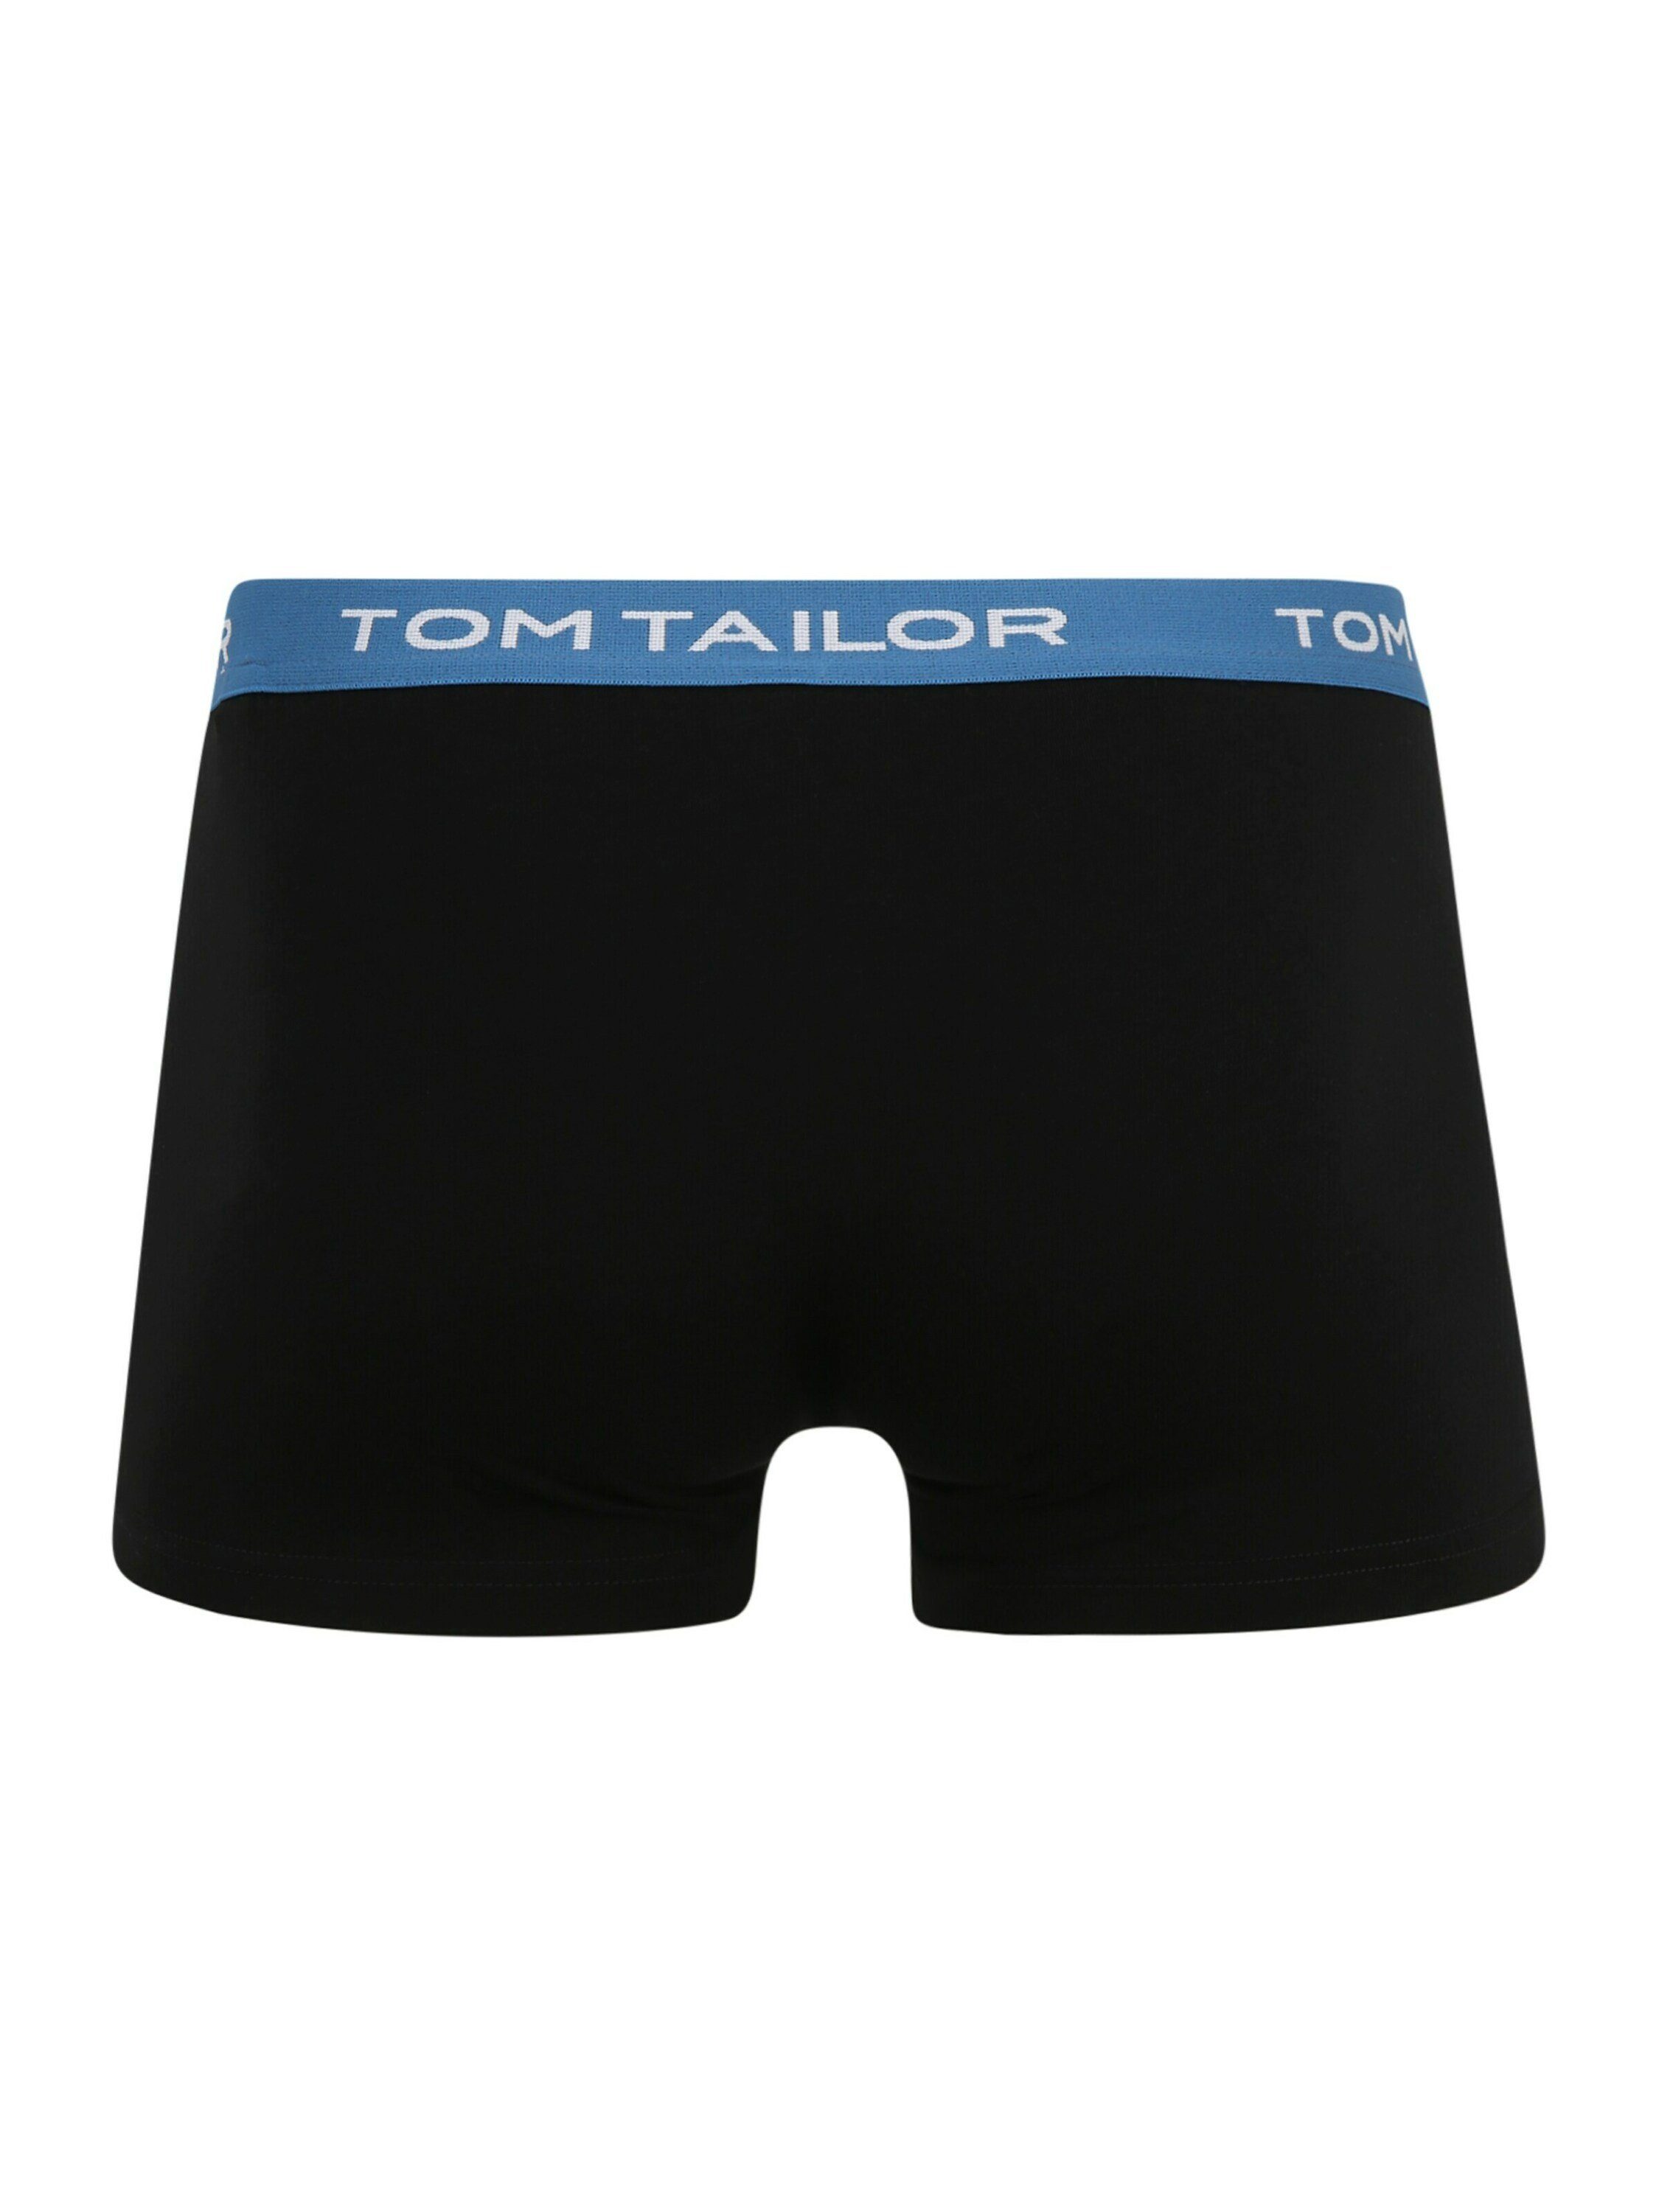 TOM TAILOR (3-St) schwarz-dunkel-uni Boxershorts